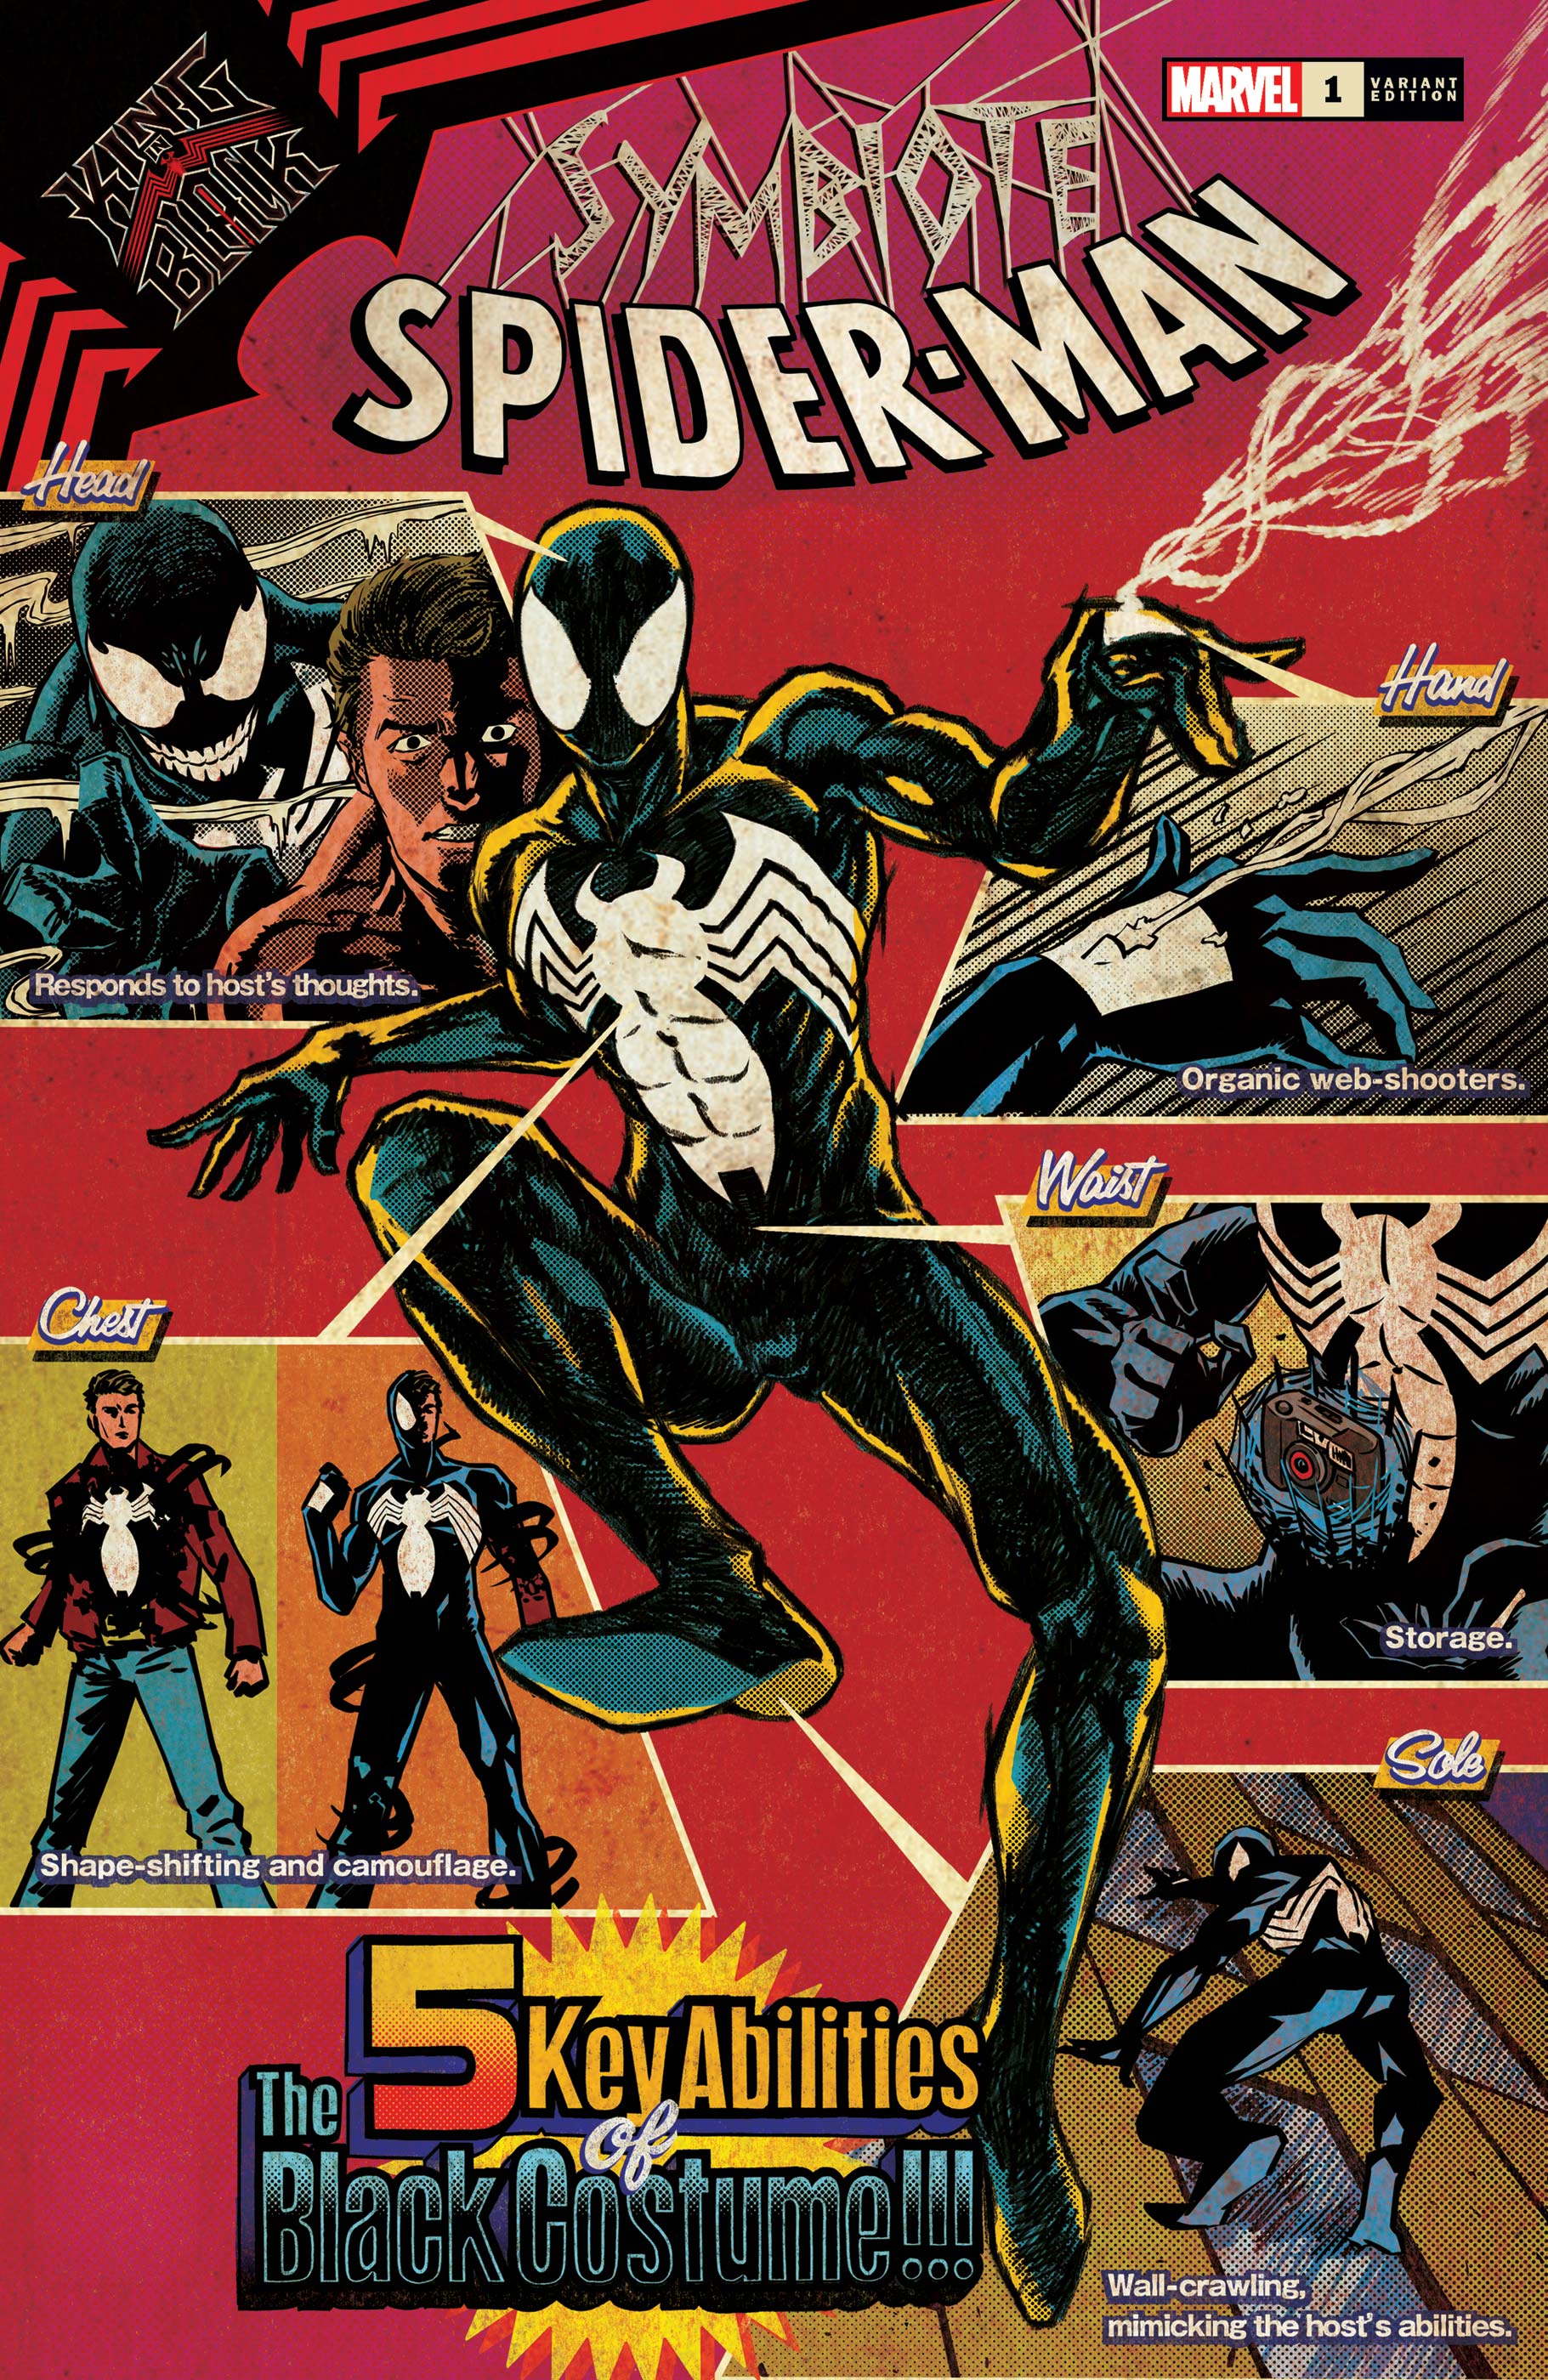 Symbiote Spider-Man: King in Black (2020) #1 (Variant)